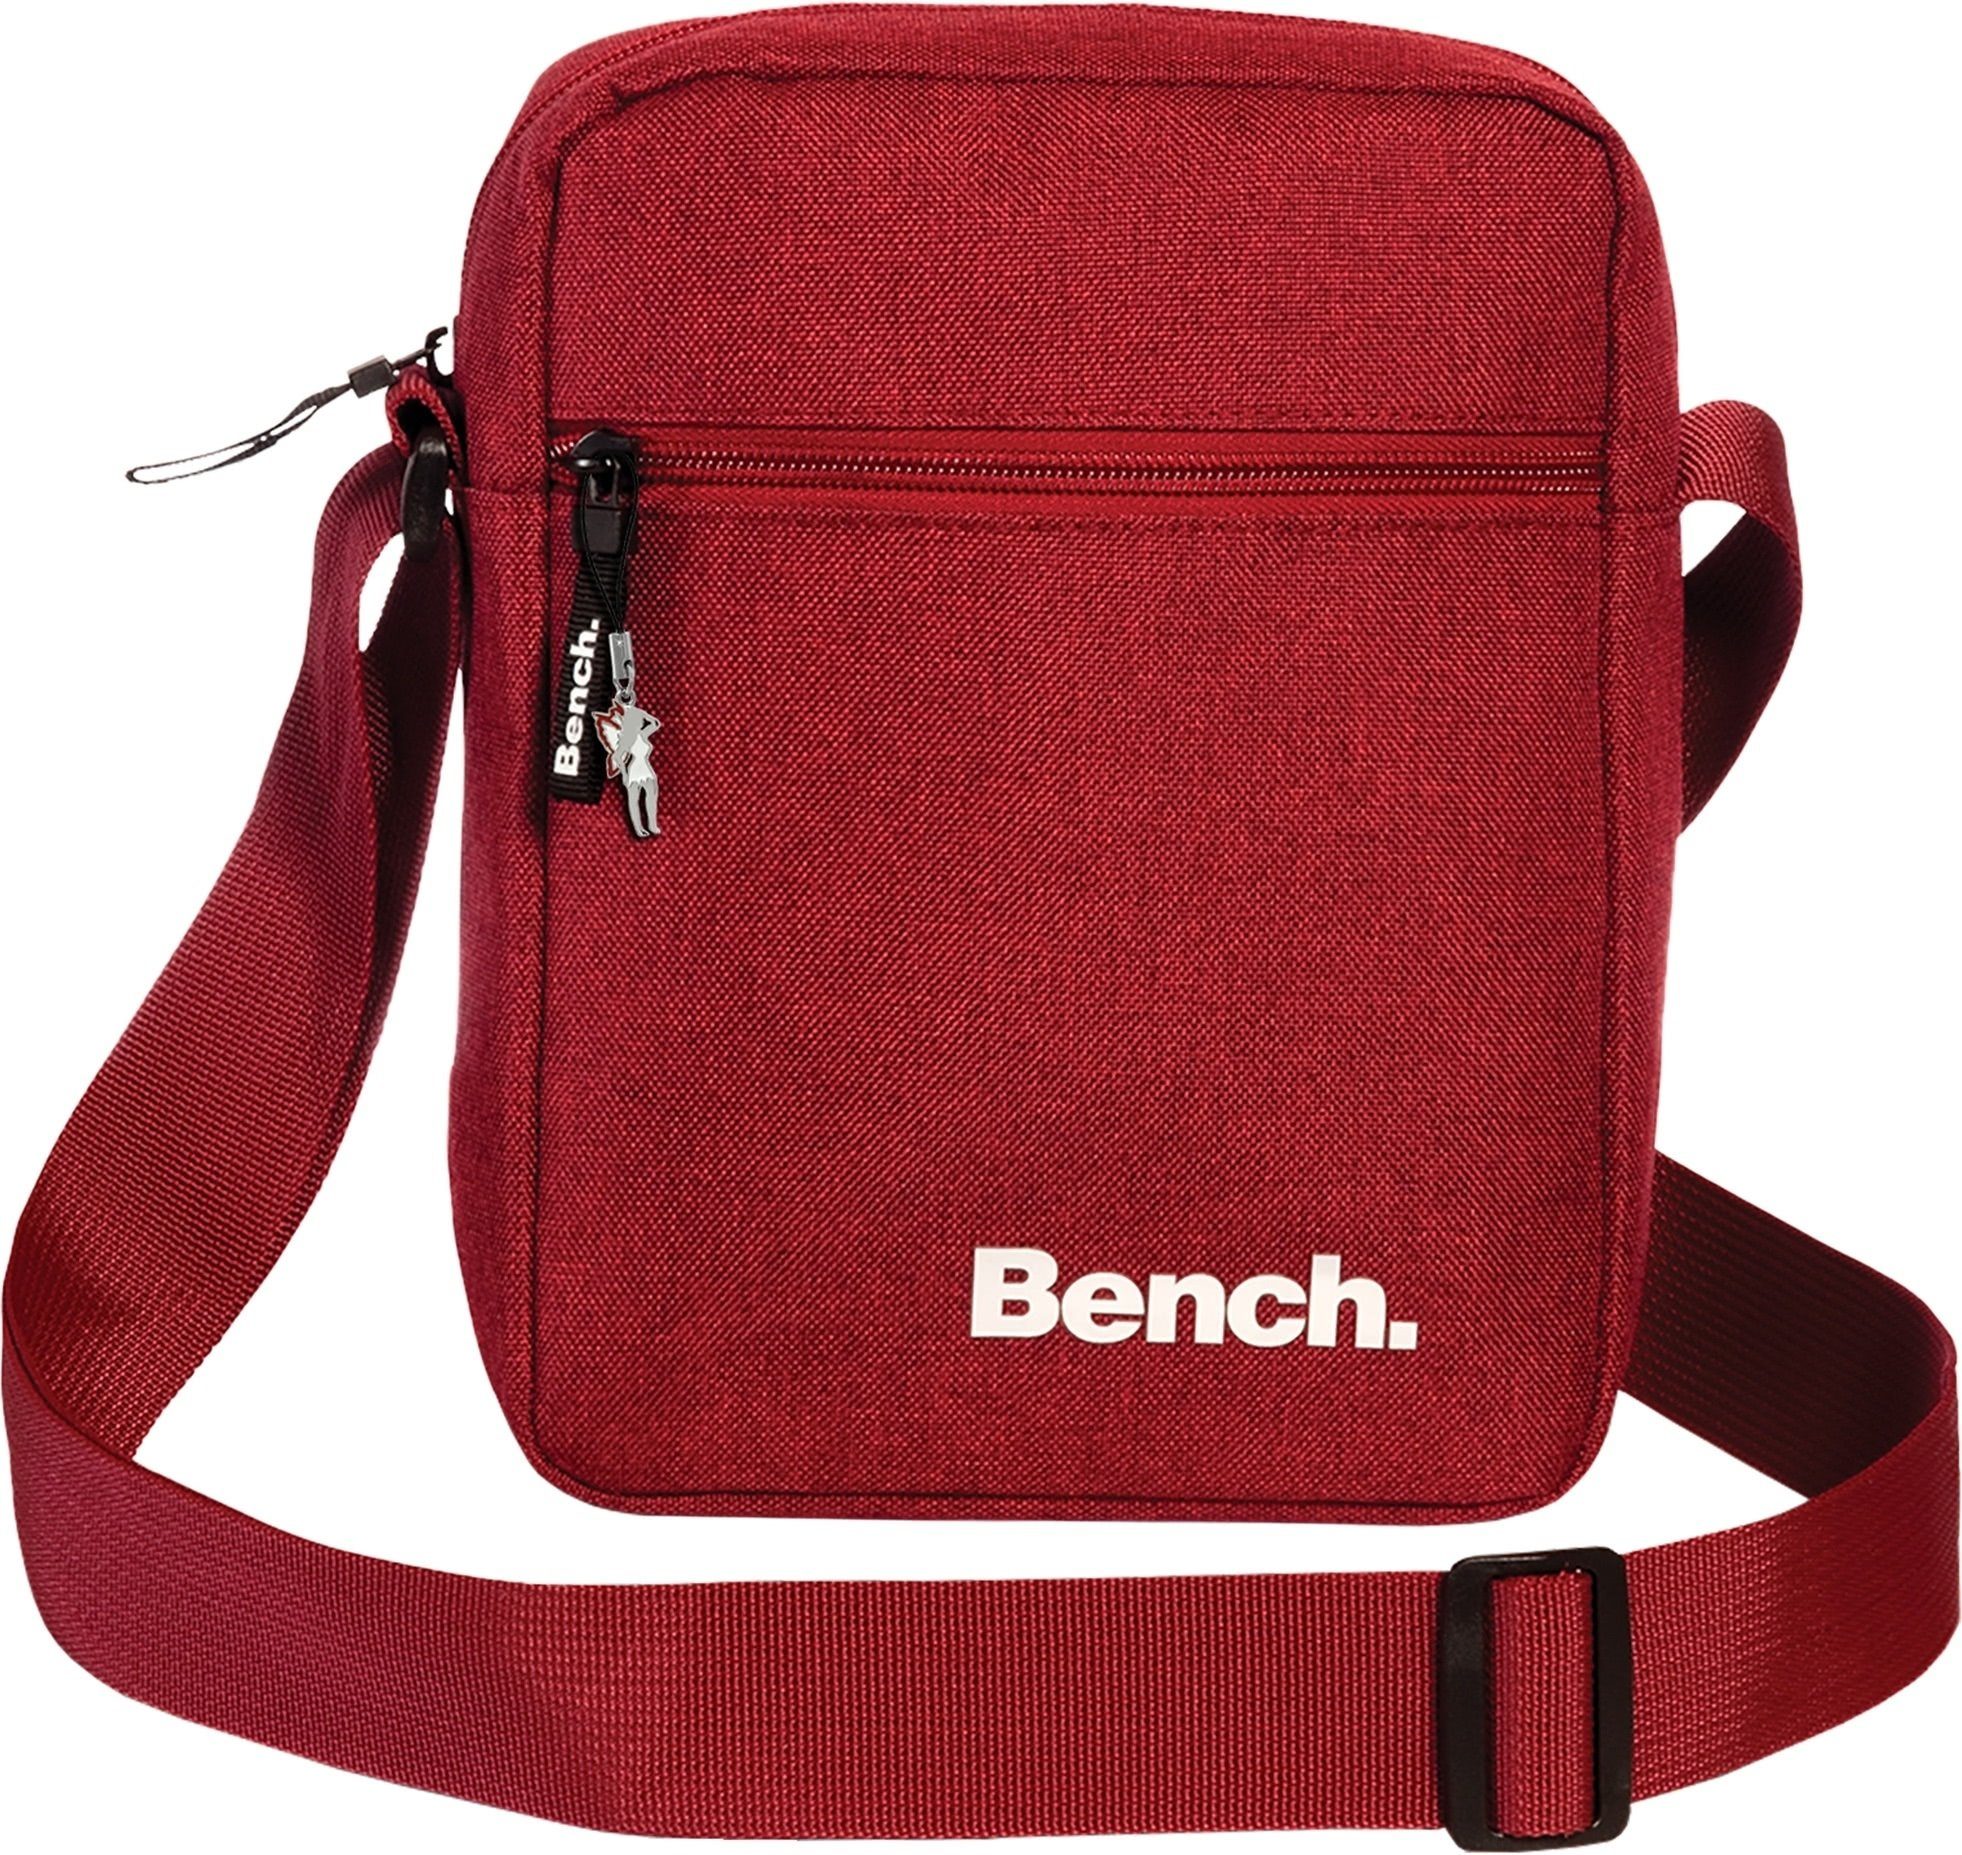 Bench. Umhängetasche Bench stylisches Cross Body Bag (Umhängetasche), Damen, Jugend Polyester Umhängetasche, rot ca. 17cm